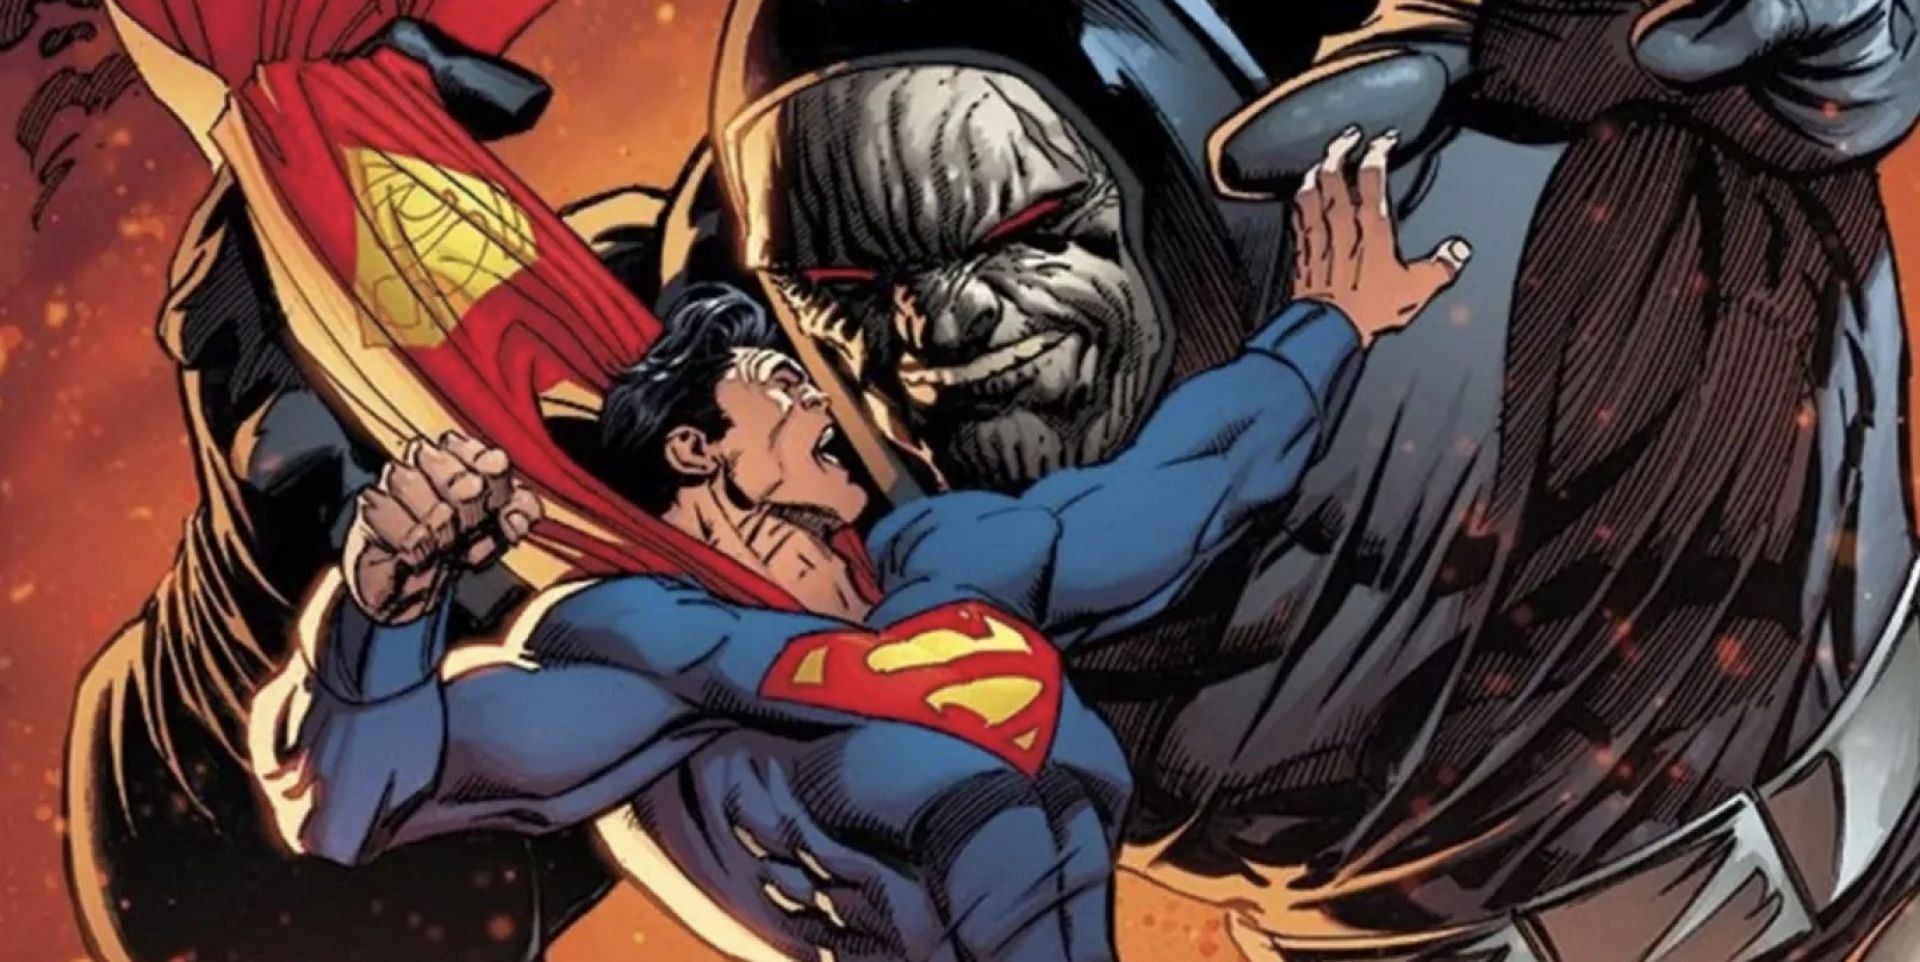 The Man of Tomorrow under the control of Darkseid (Image via DC Comics)